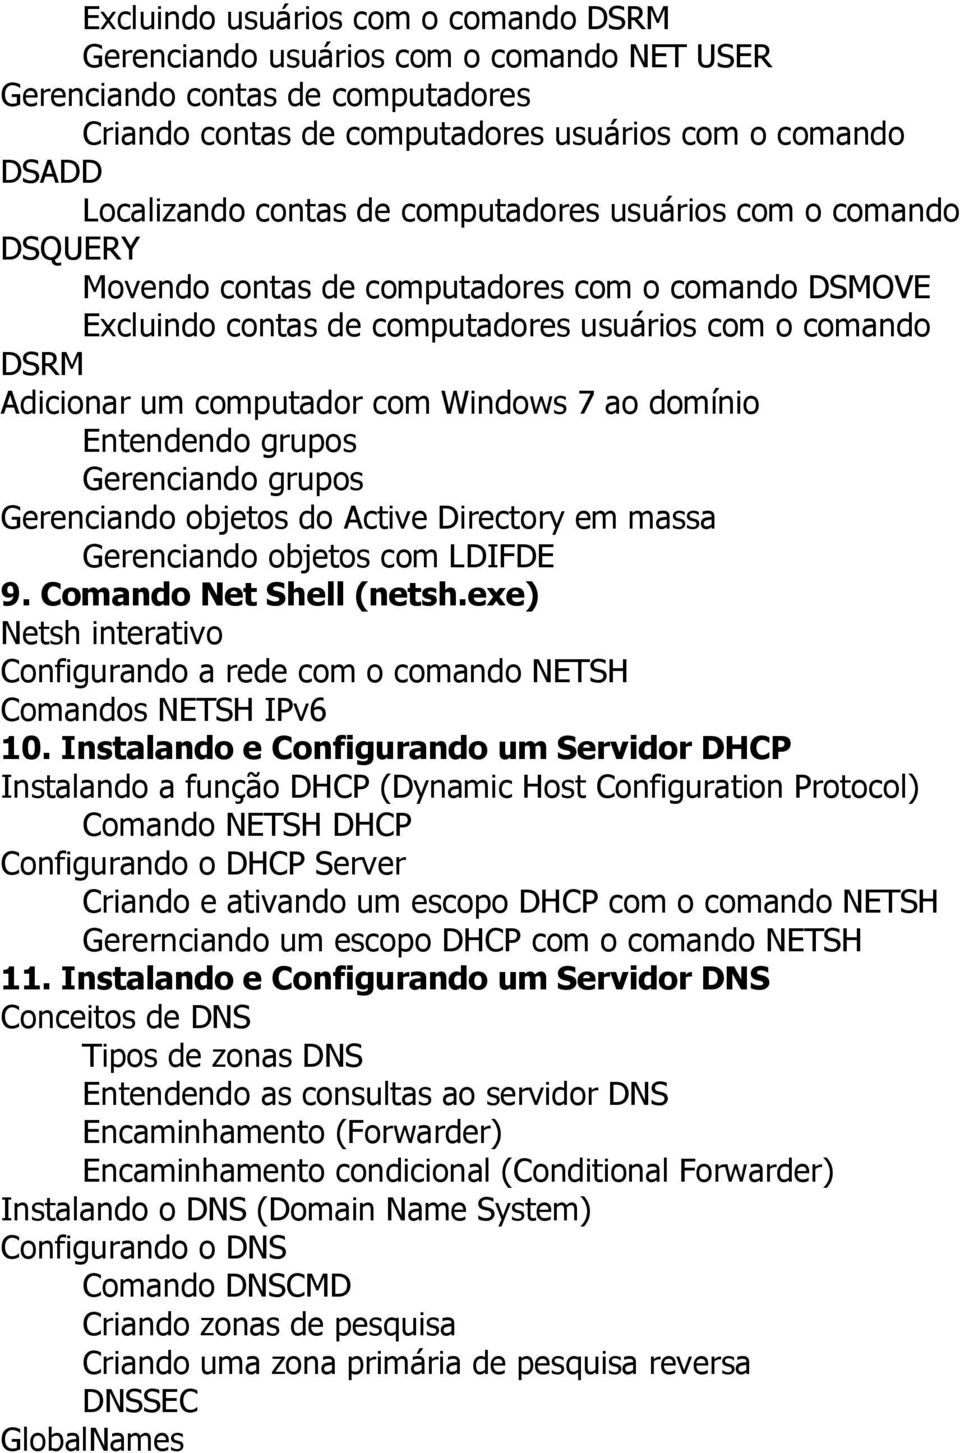 domínio Entendendo grupos Gerenciando grupos Gerenciando objetos do Active Directory em massa Gerenciando objetos com LDIFDE 9. Comando Net Shell (netsh.